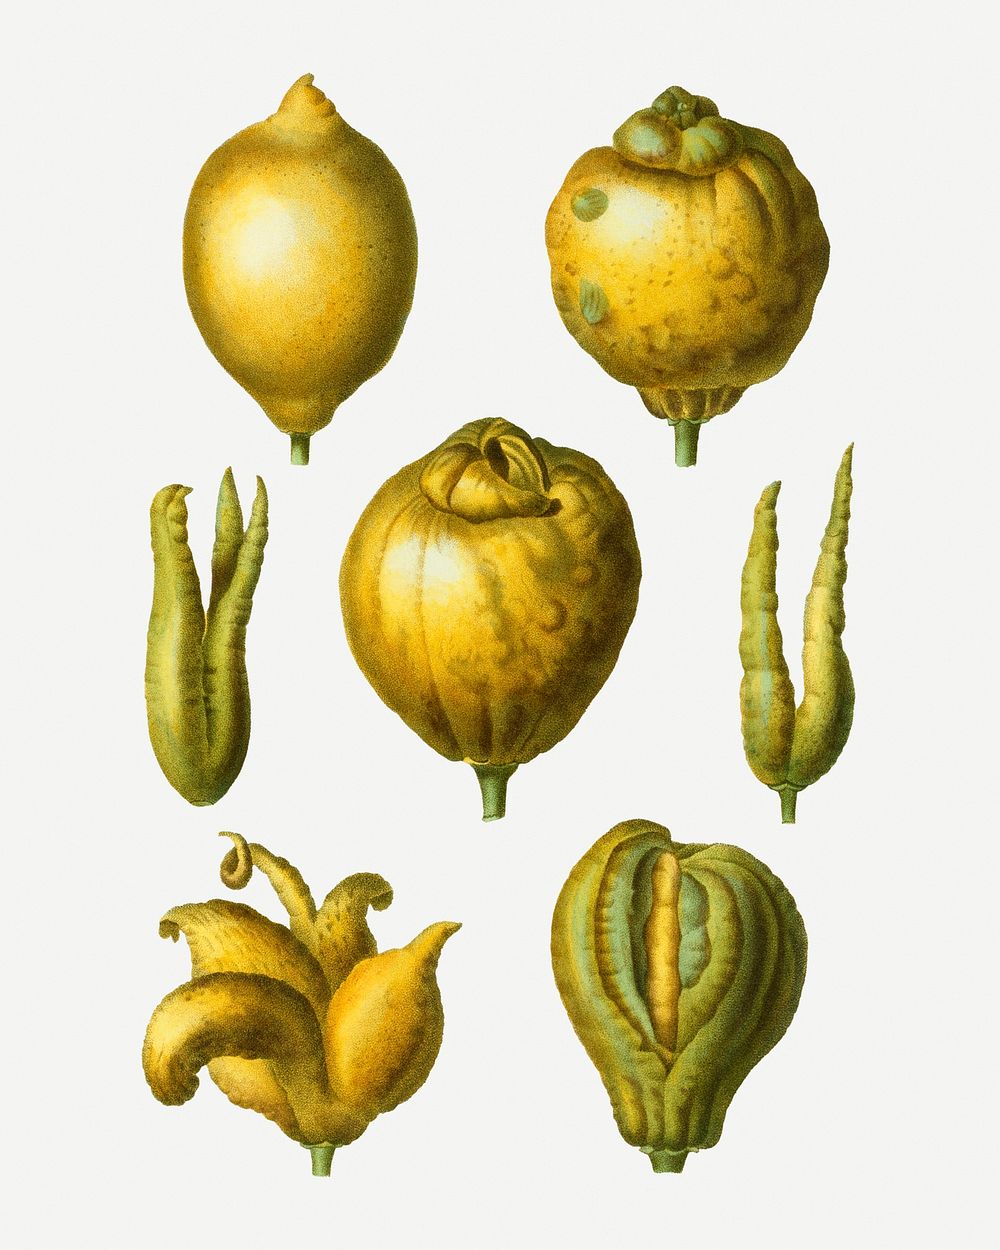 Vintage various lemon fruits illustration